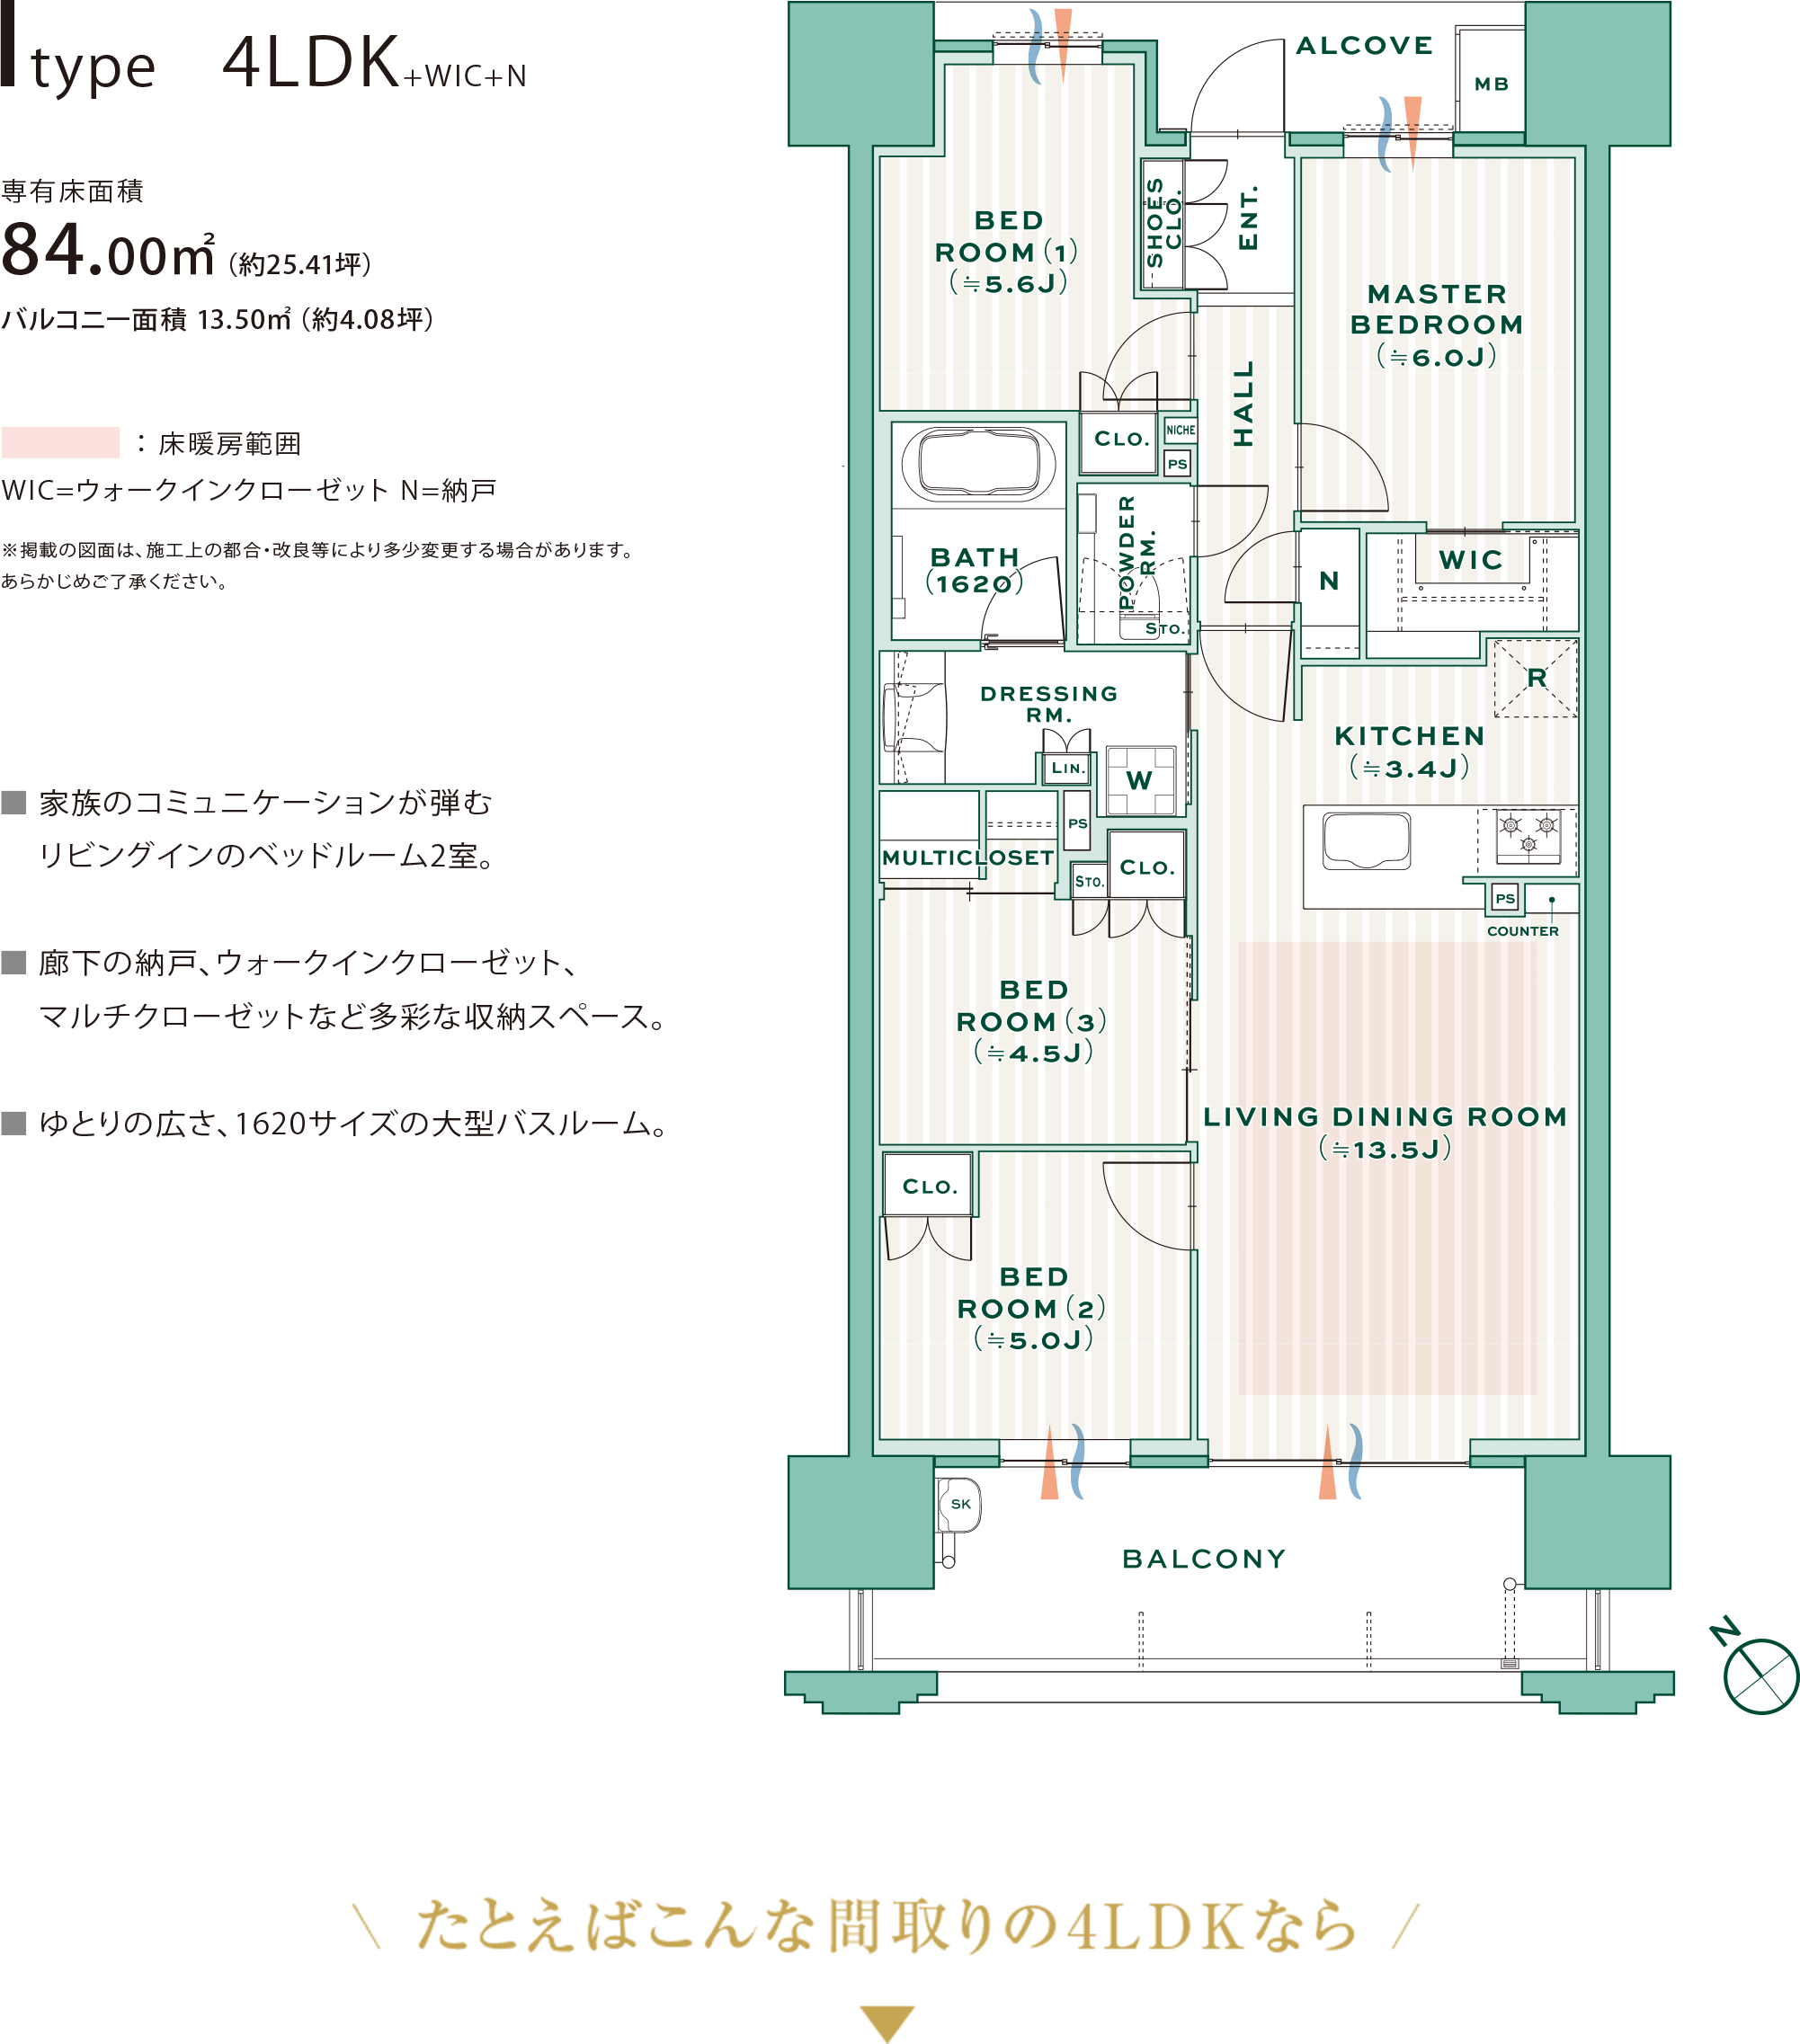 
            Itype　4LDK+WIC+N
            専有床面積
            84.00㎡（約25.41坪）バルコニー面積 13.50㎡（約4.08坪）
            ※掲載の図面は、施工上の都合・改良等により多少変更する場合があります。あらかじめご了承ください。
            ■ 家族のコミュニケーションが弾むリビングインのベッドルーム2室。
            ■ 廊下の納戸、ウォークインクローゼット、マルチクローゼットなど多彩な収納スペース。
            ■ ゆとりの広さ、1620サイズの大型バスルーム。
          